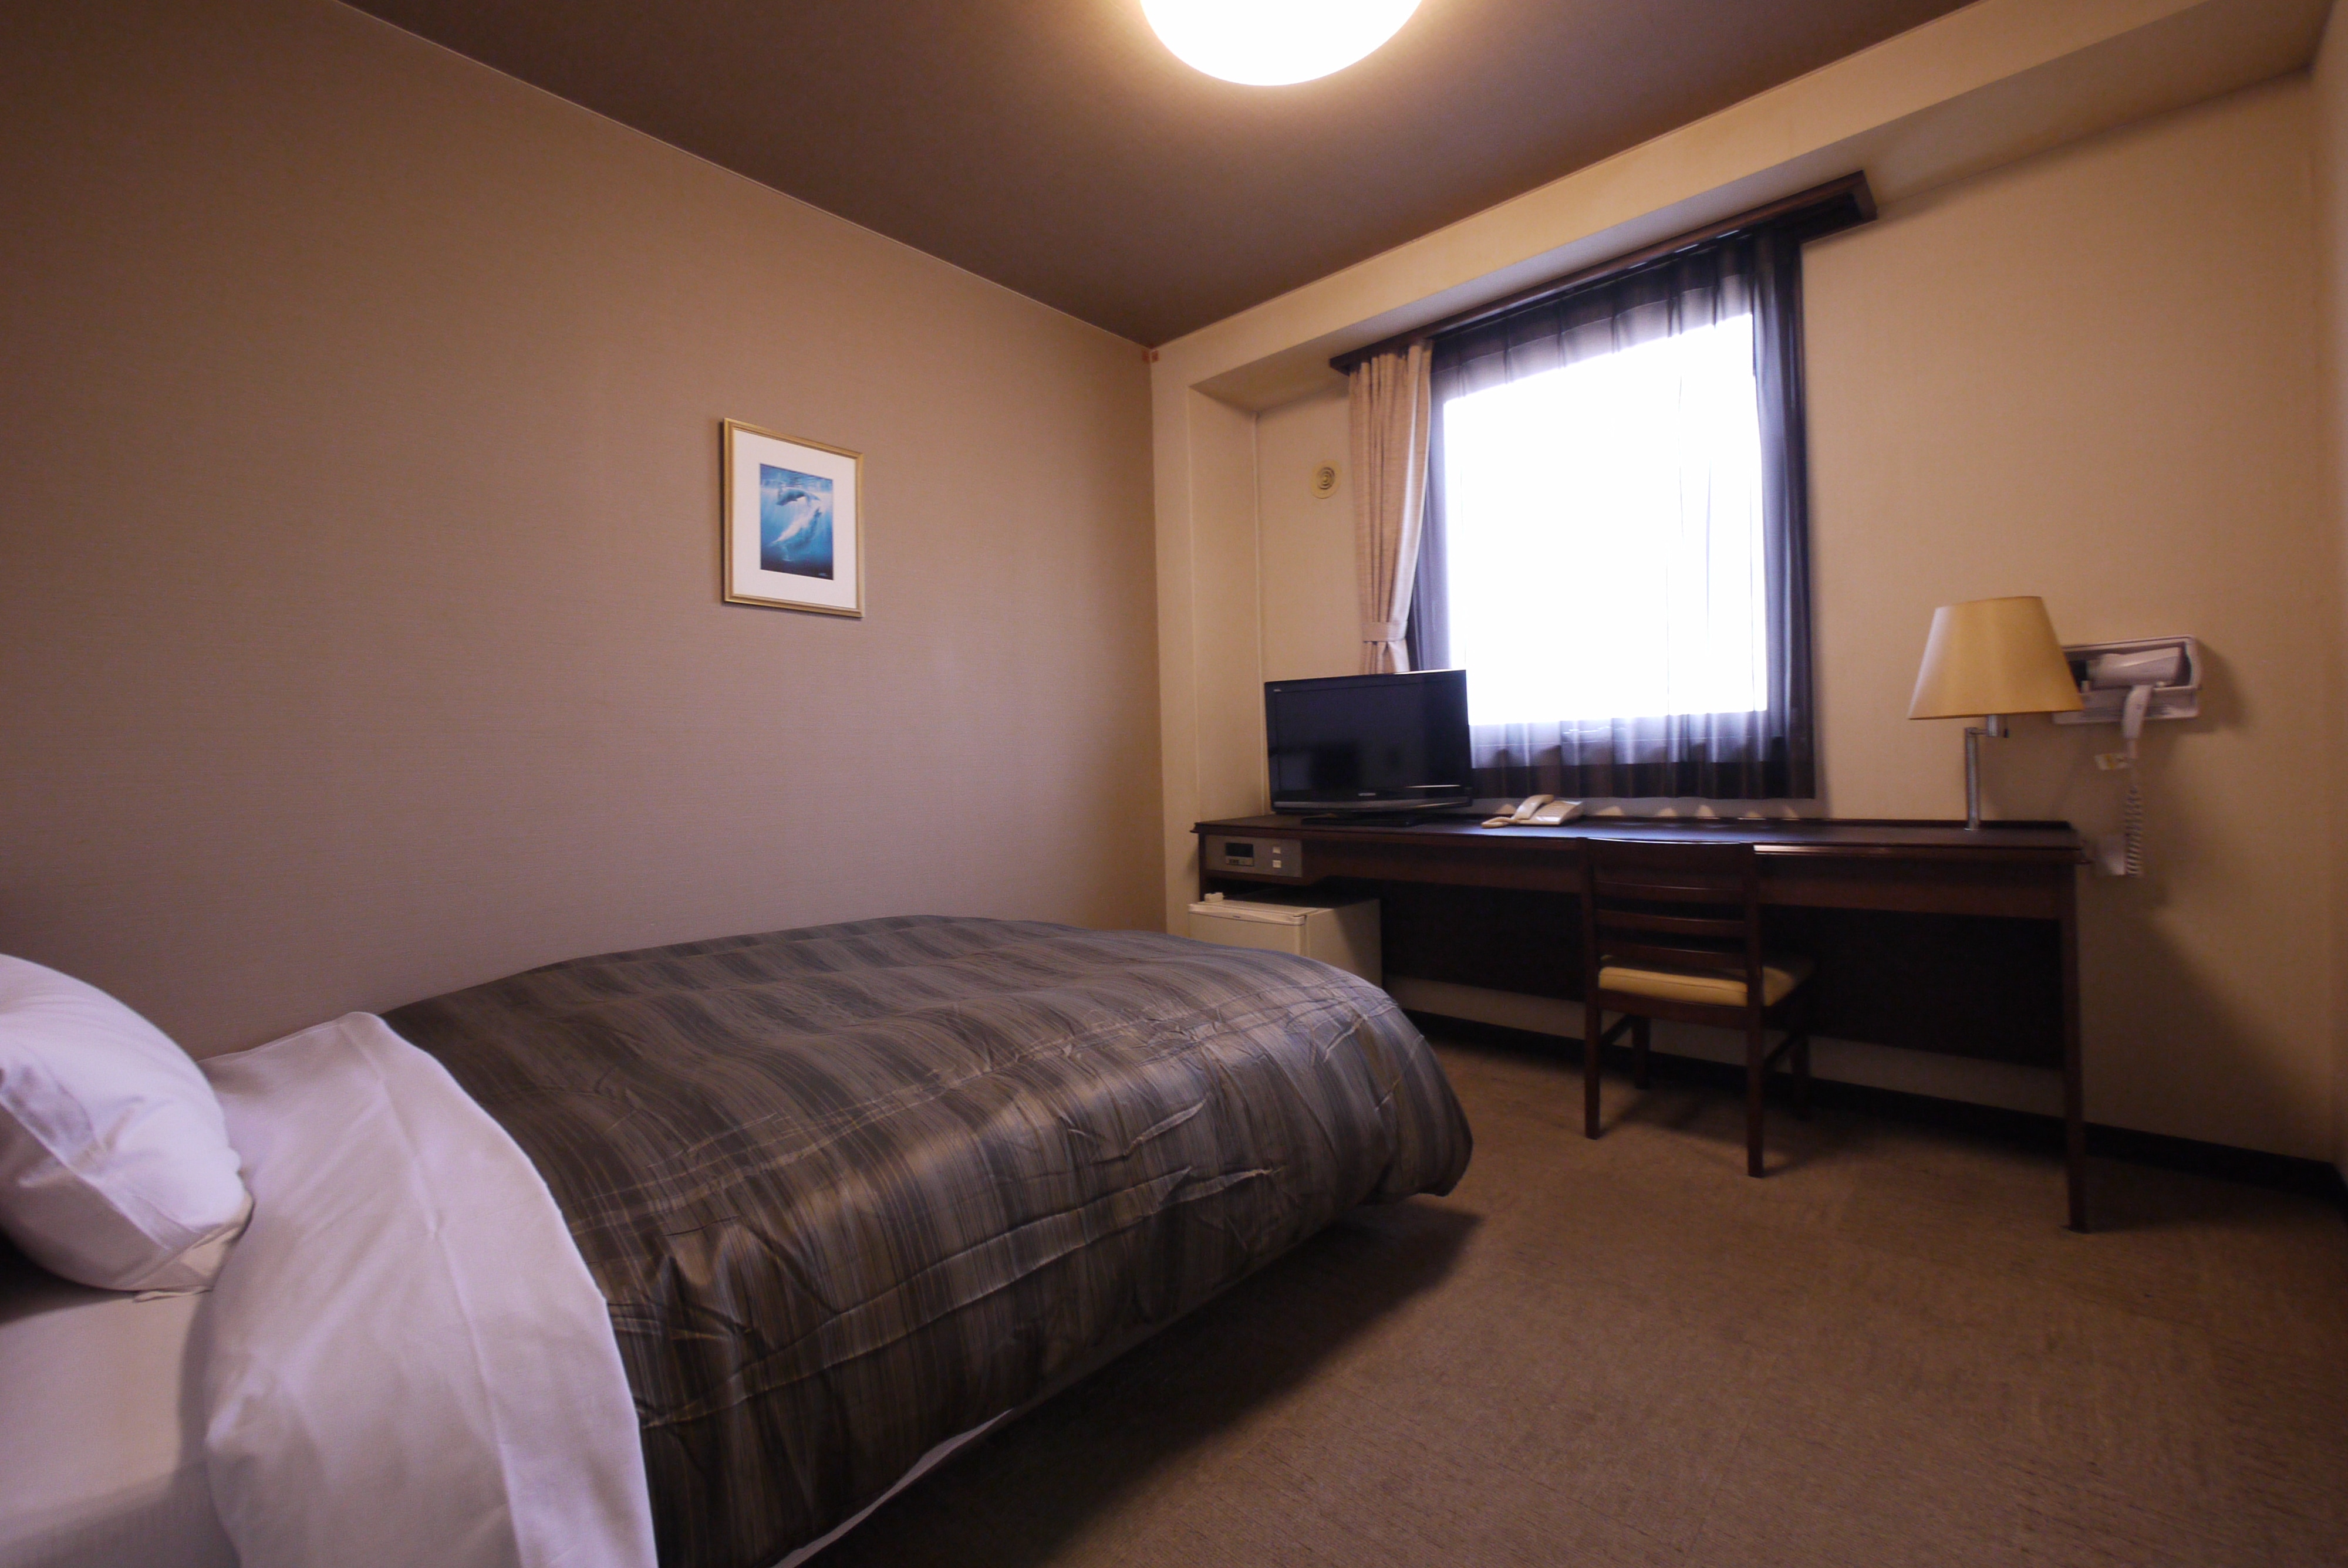 Tempat tidur single room ukuran 140 cm & kali; 196 cm WOWOW bisa ditonton gratis